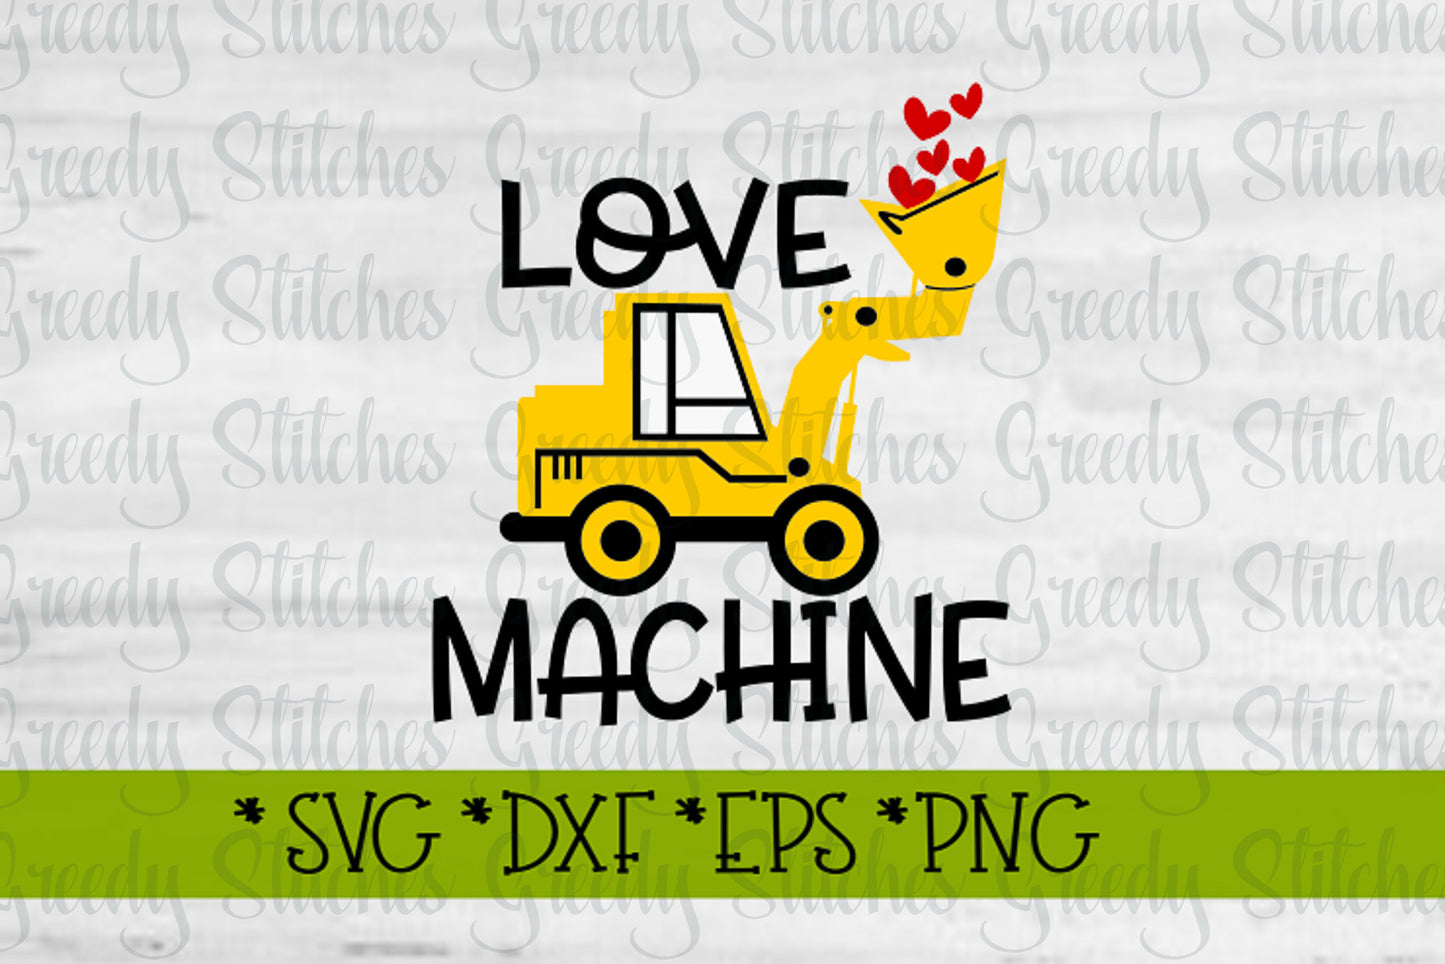 Love Machine svg, dxf, eps, png. Valentine SVG | Machine SvG | Tractor SvG | Backhoe SvG | Valentine&#39;s Day SvG | Instant Download Cut File